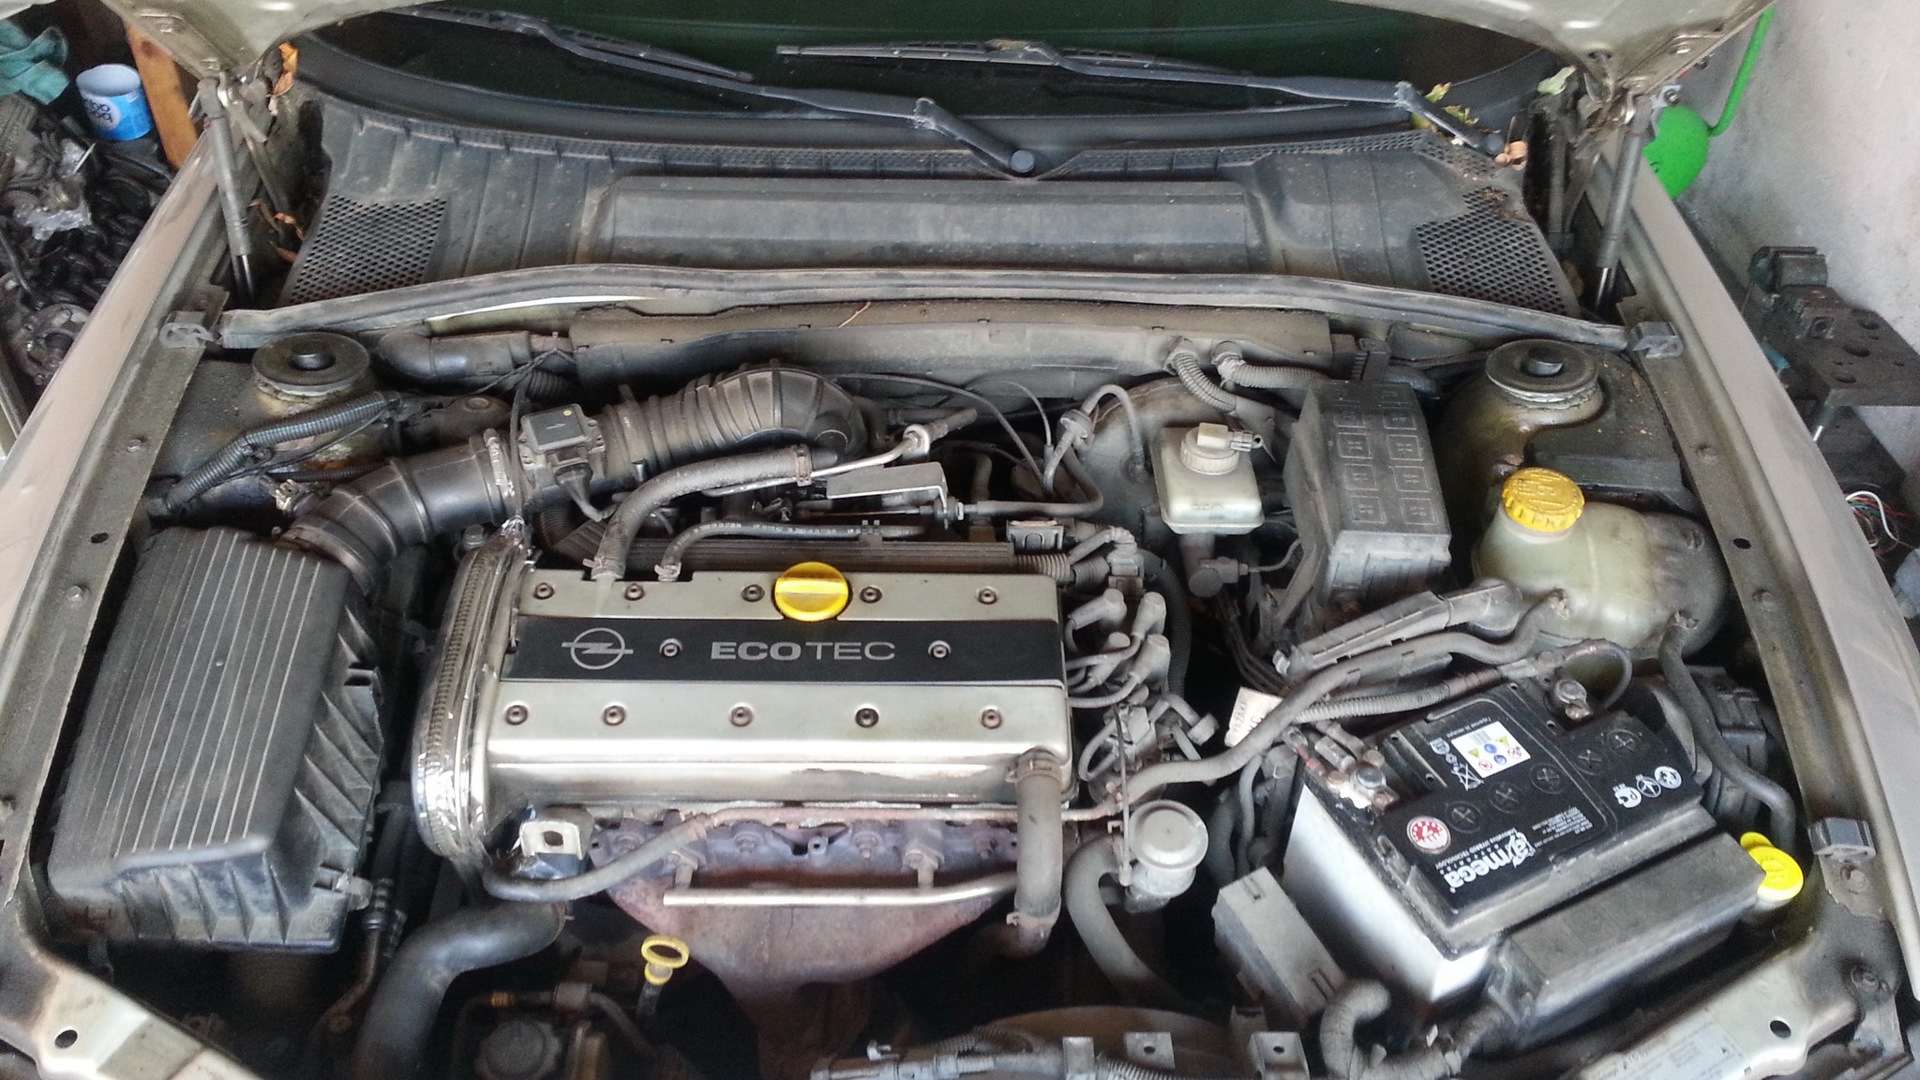 X18xe1 вектра б. Мотор Opel Vectra b 1.8 x18xe 1. Двигатель Опель Вектра б 1.8 x18xe. Опель Вектра б x18xe. Opel Vectra b двигатель 1.8.